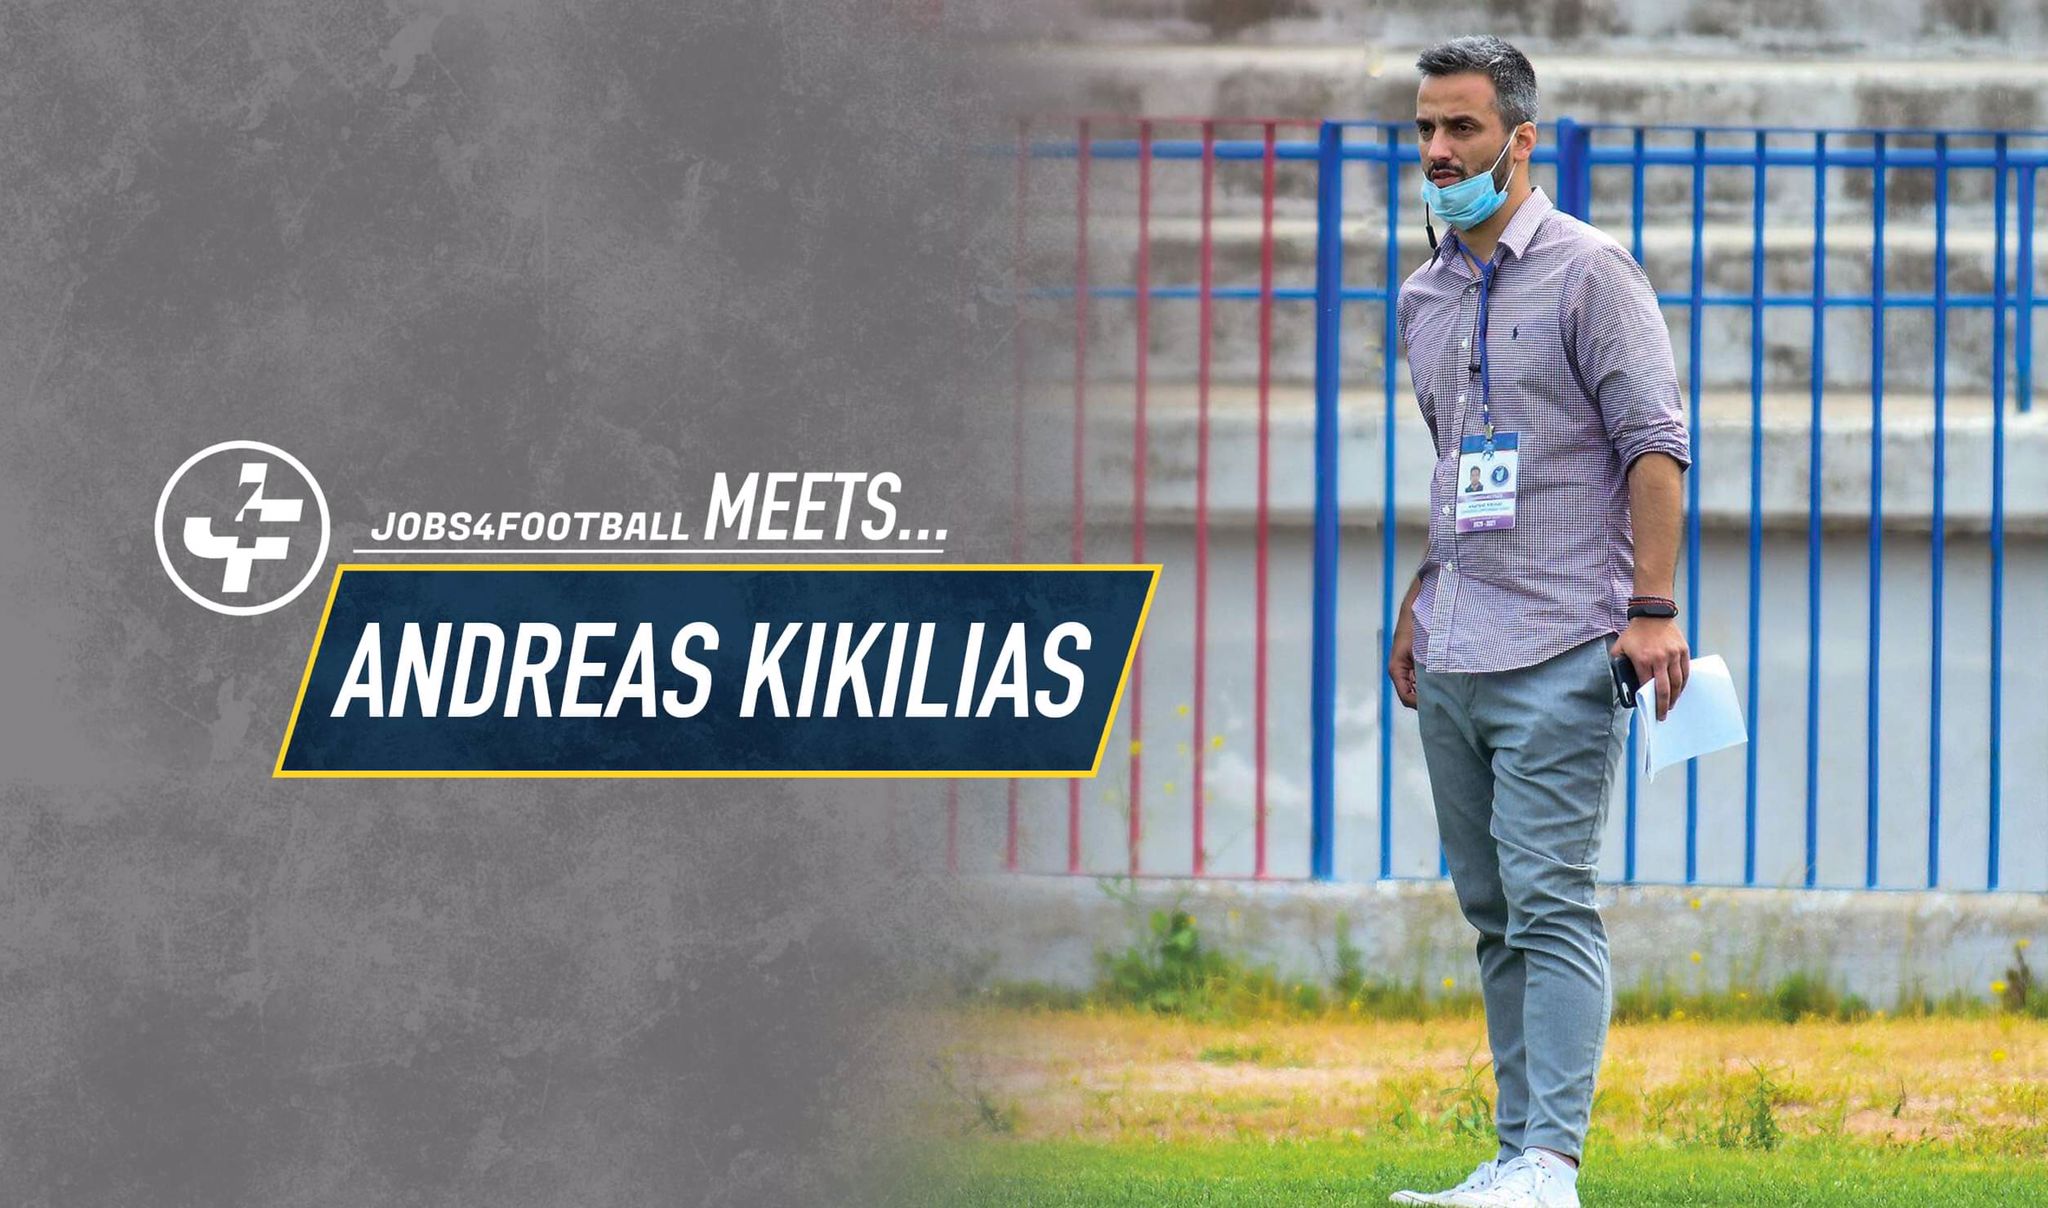 Jobs4Football meets Andreas Kikilias-Strakas